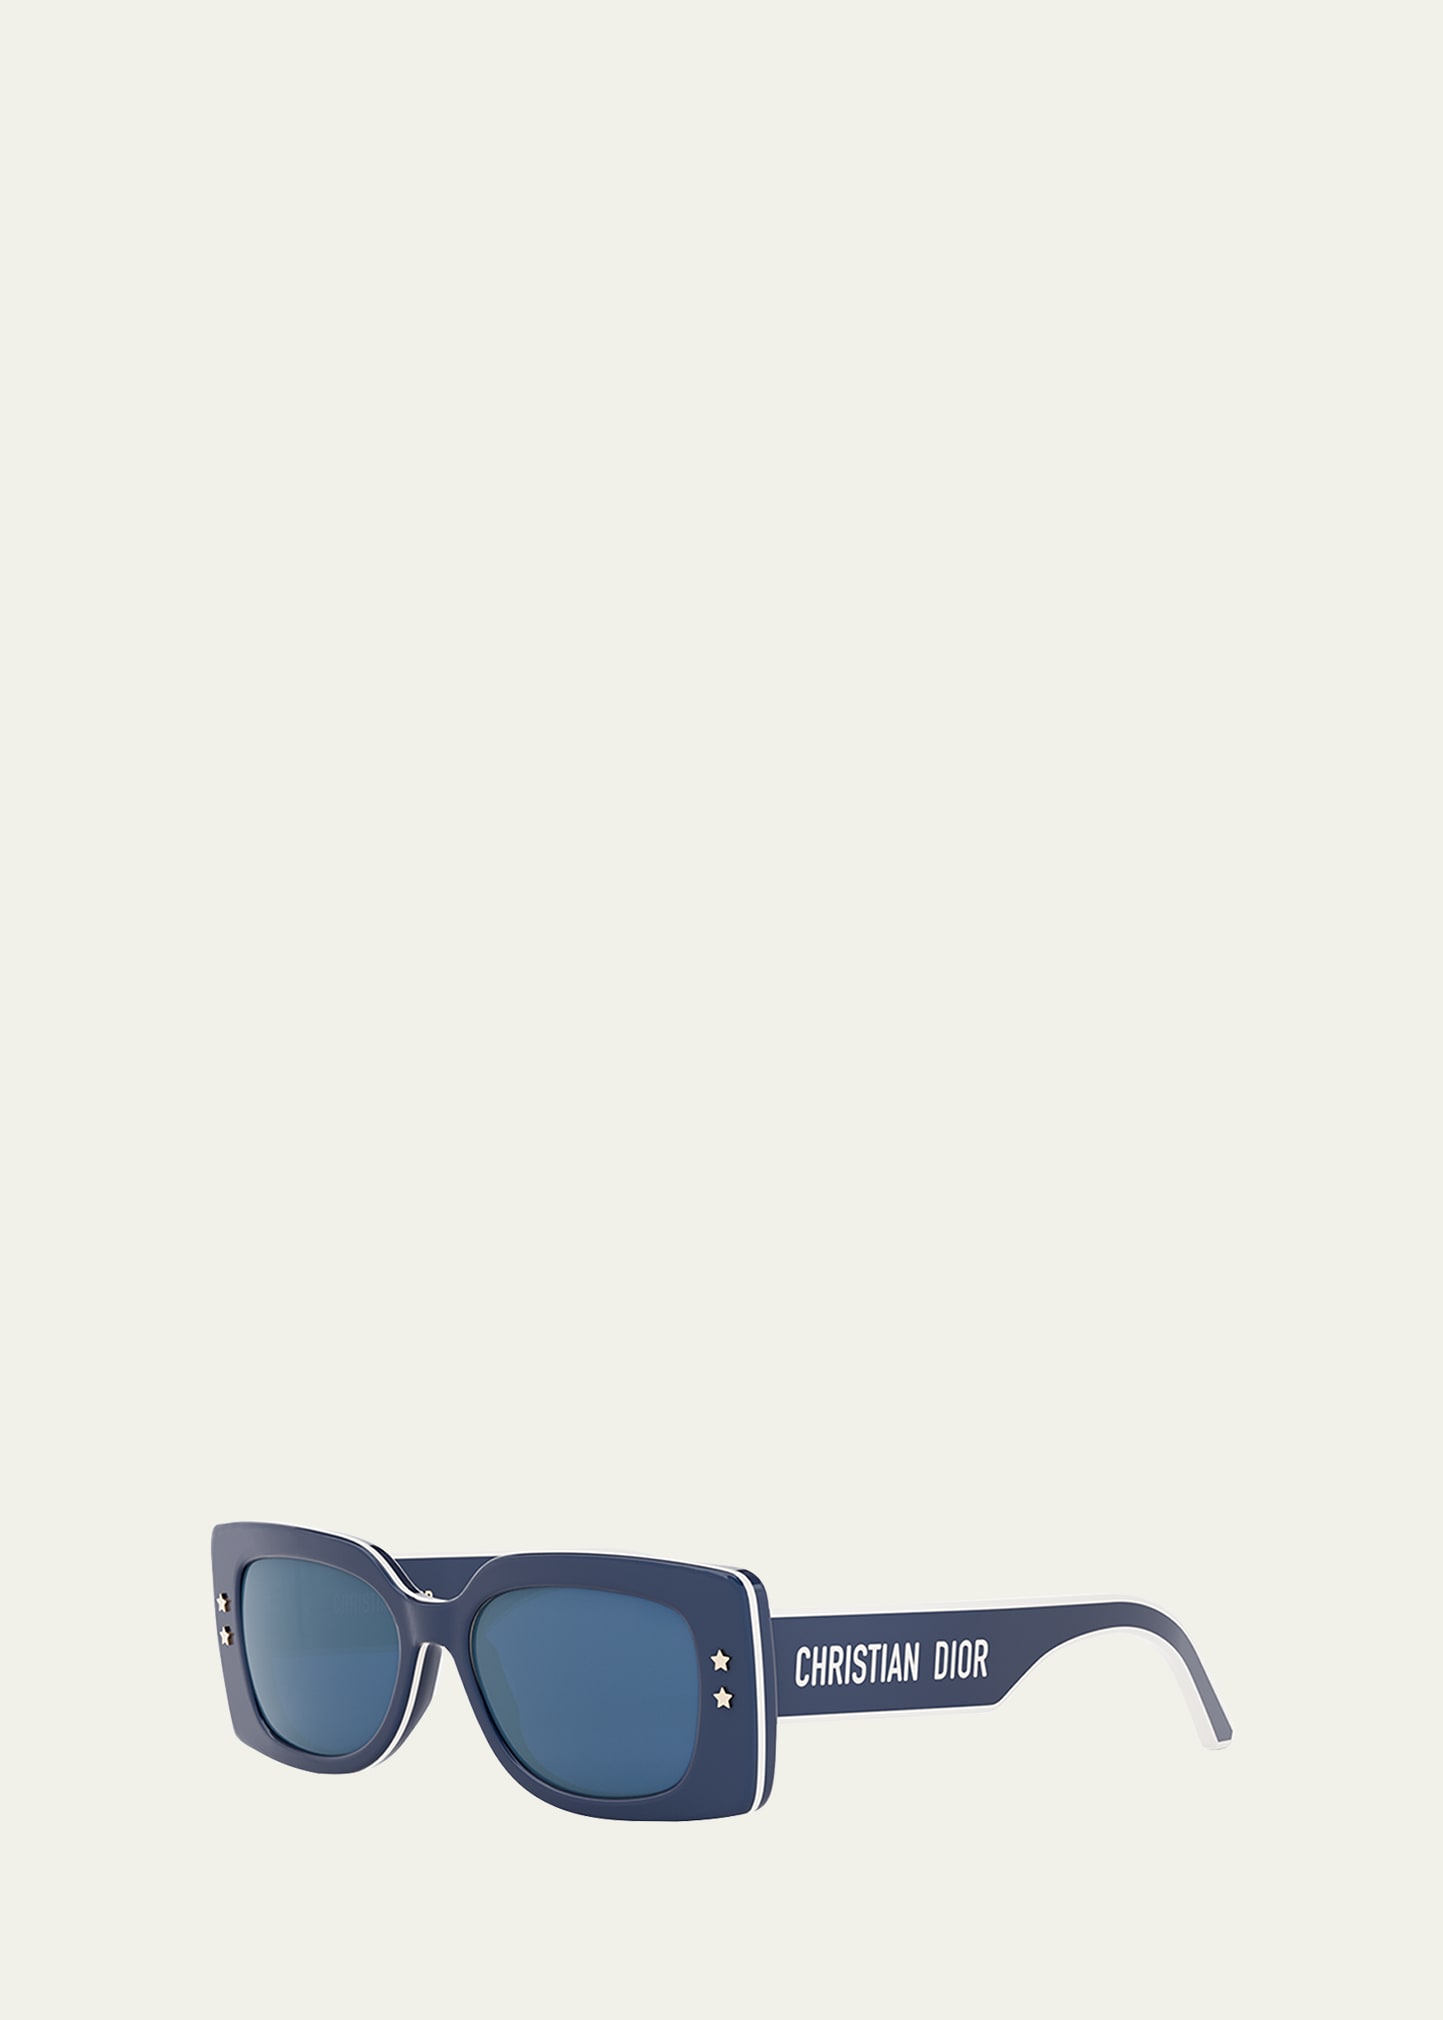 DiorPacific S1U Sunglasses